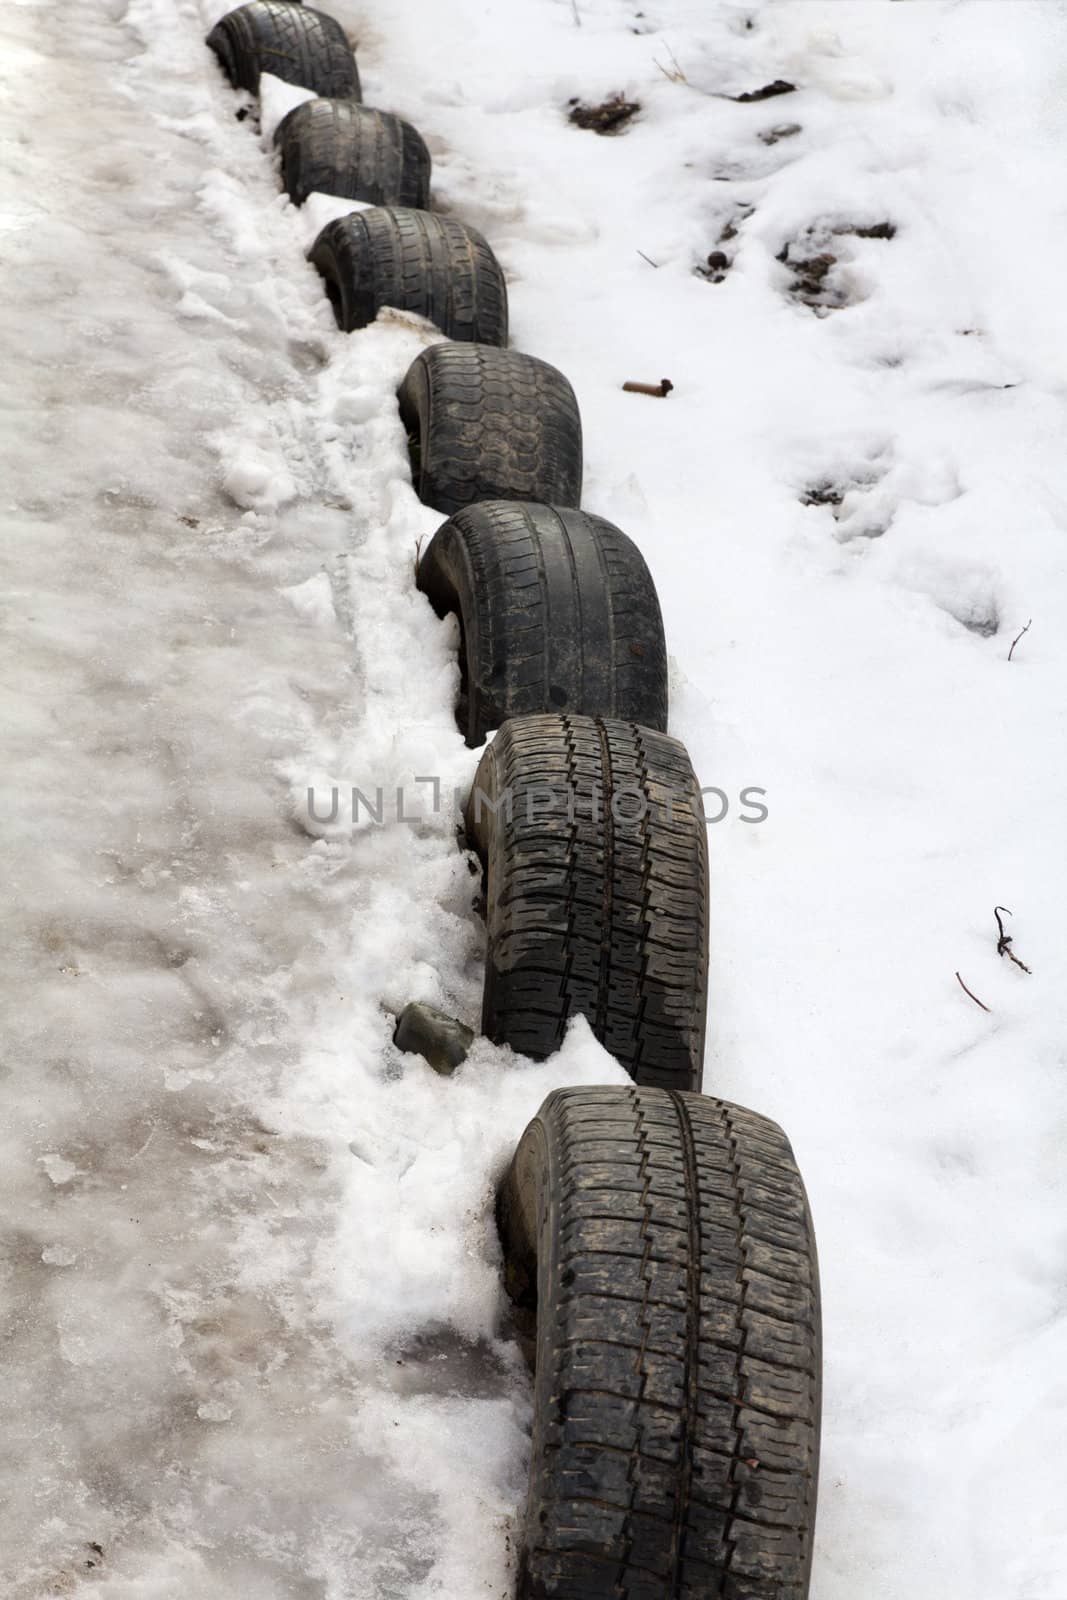 tires in the snow by schankz